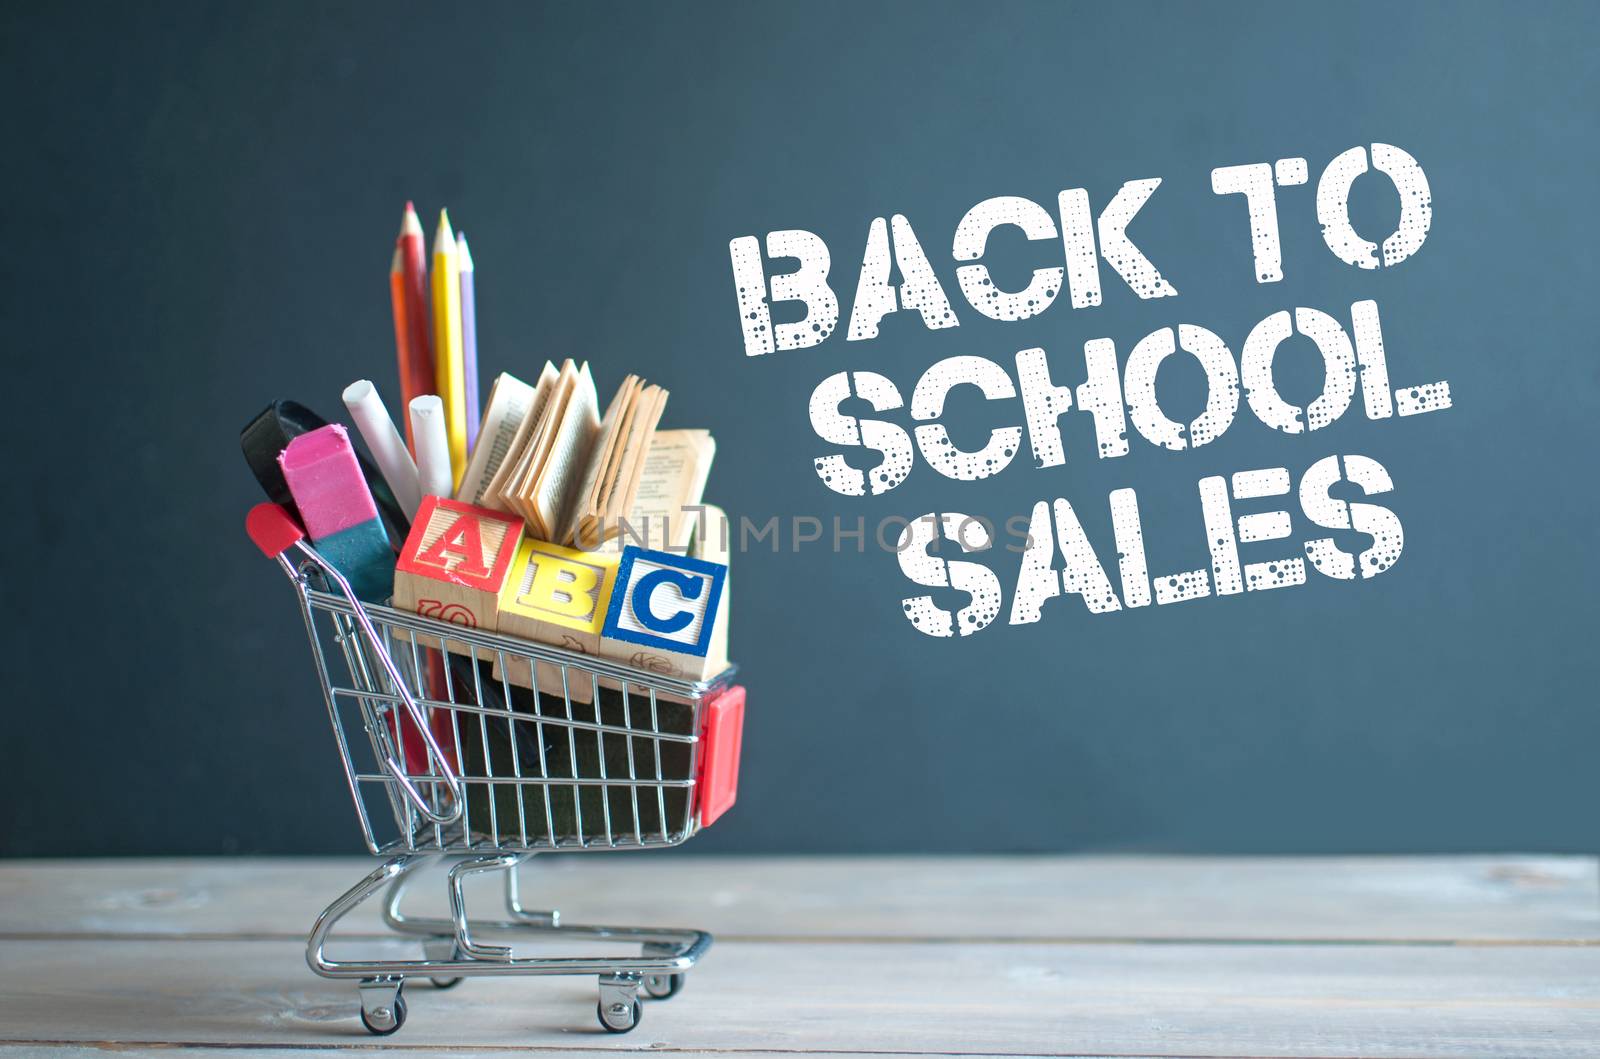 Back to school sales by unikpix